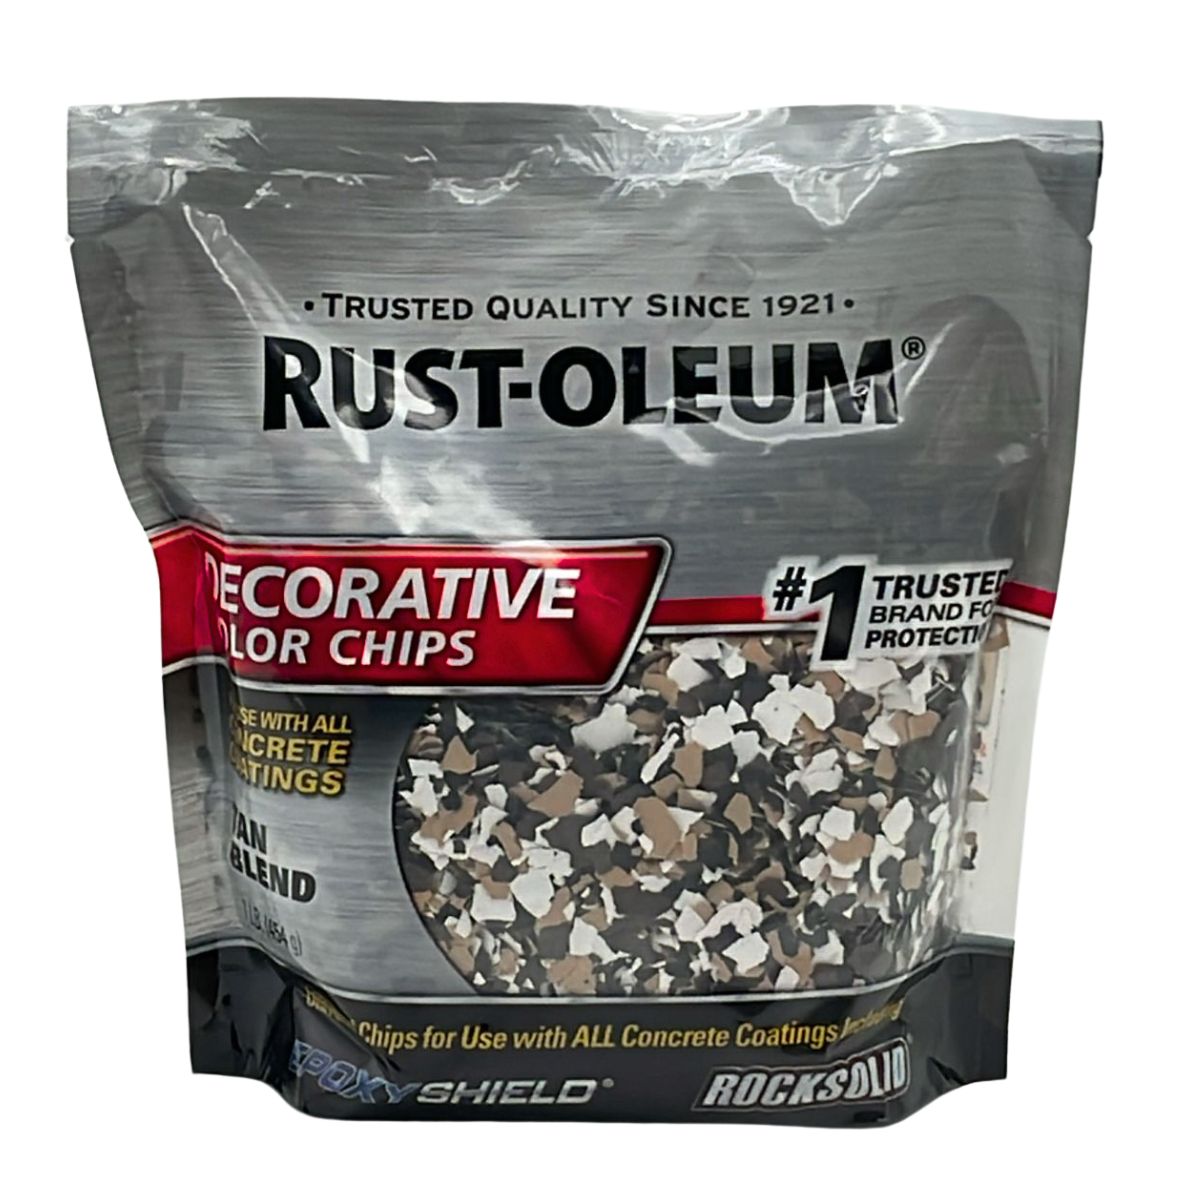 Rust-Oleum Decorative Color Chips | Tan Blend 454g - South East Clearance Centre